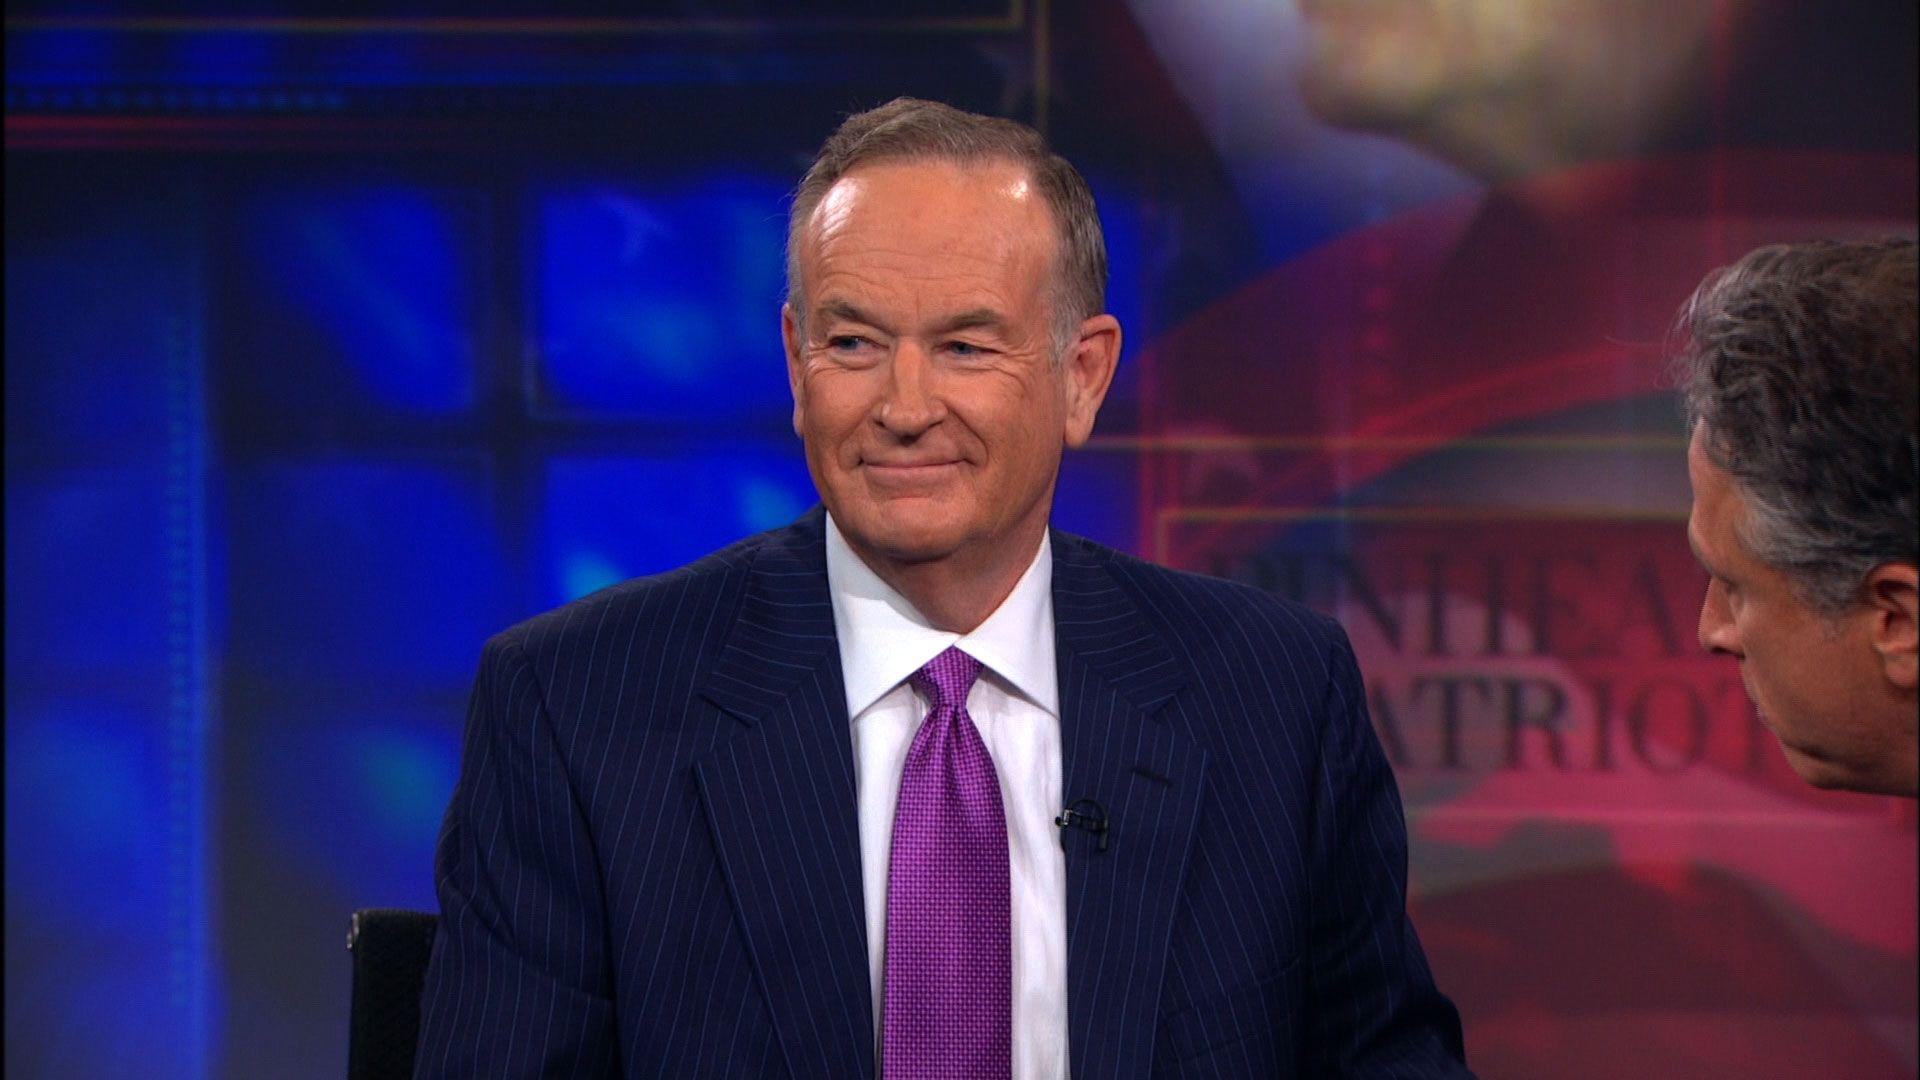 Bill O'Reilly Daily Show with Jon Stewart Video Clip